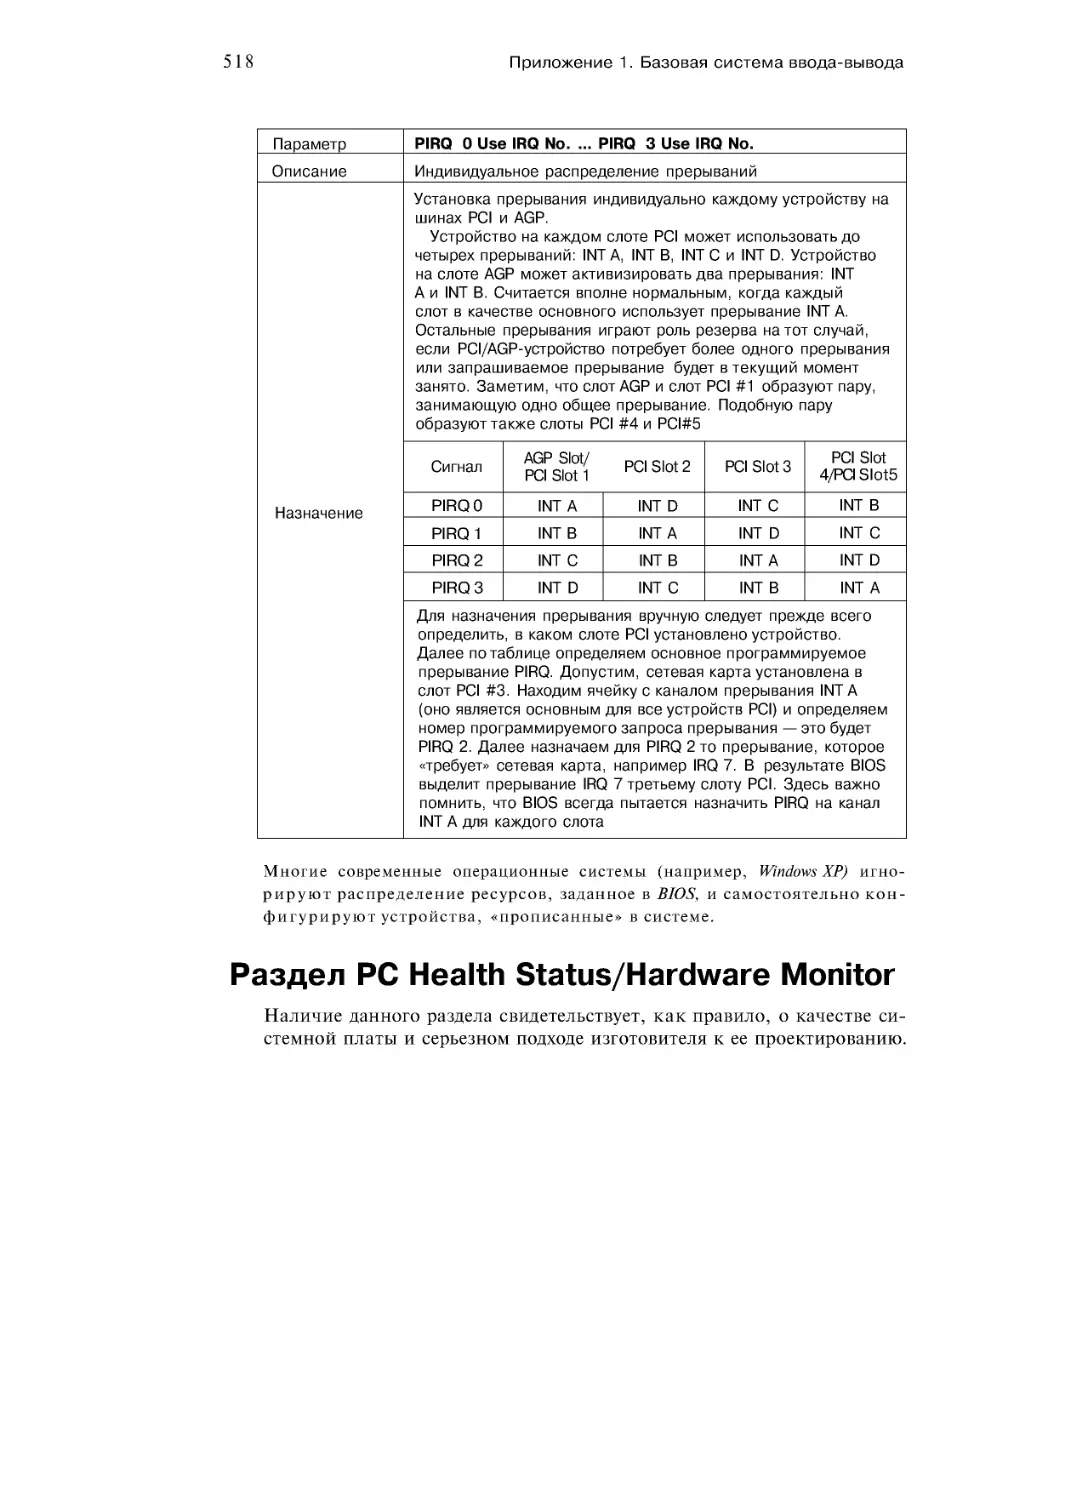 ﻿Раздел PC Health Status/Hardware Monito